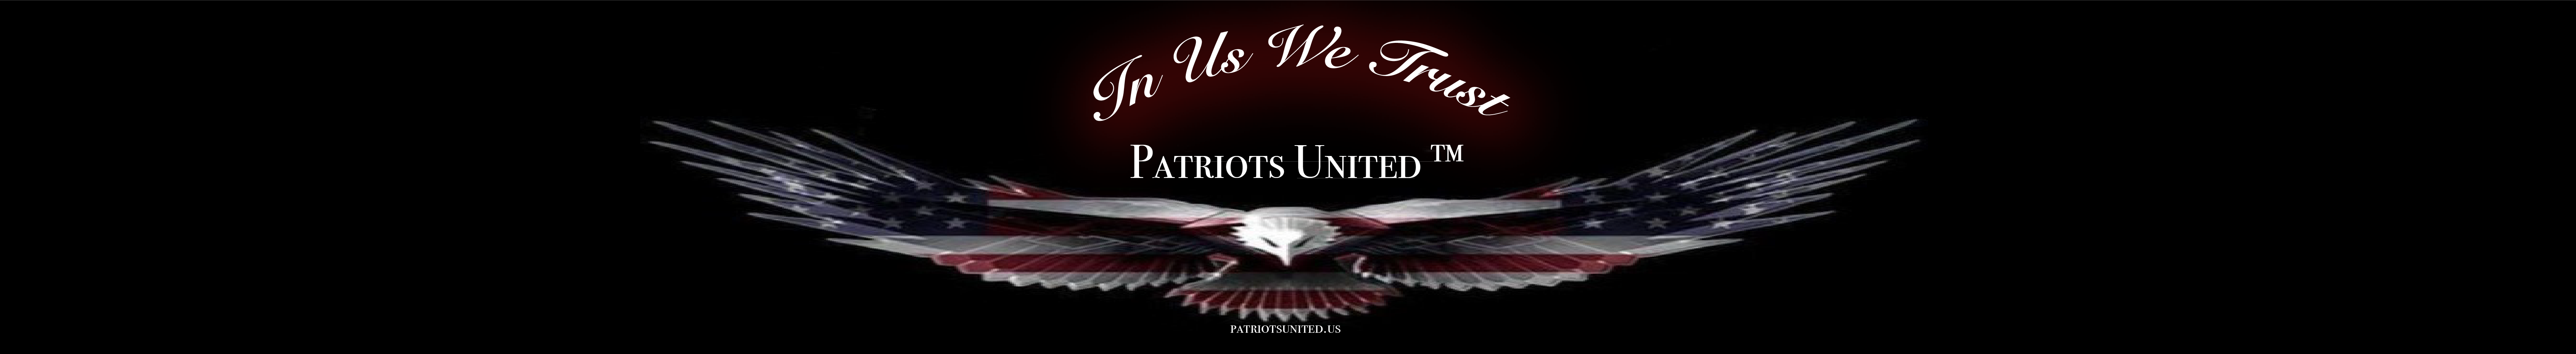 patriots united logo